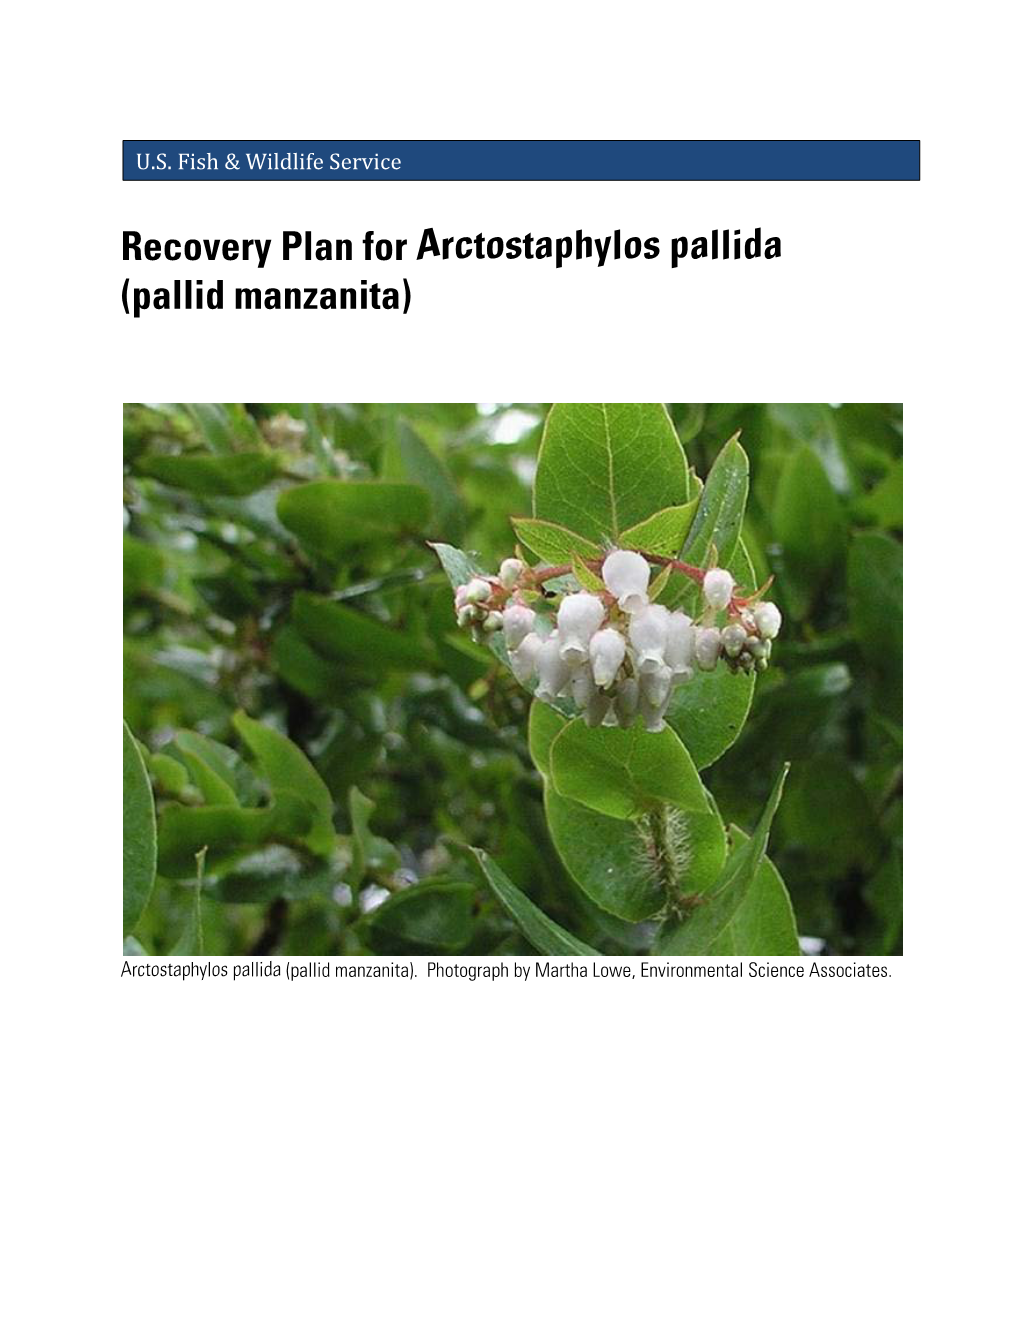 Recovery Plan for Arctostaphylos Pallida (Pallid Manzanita)